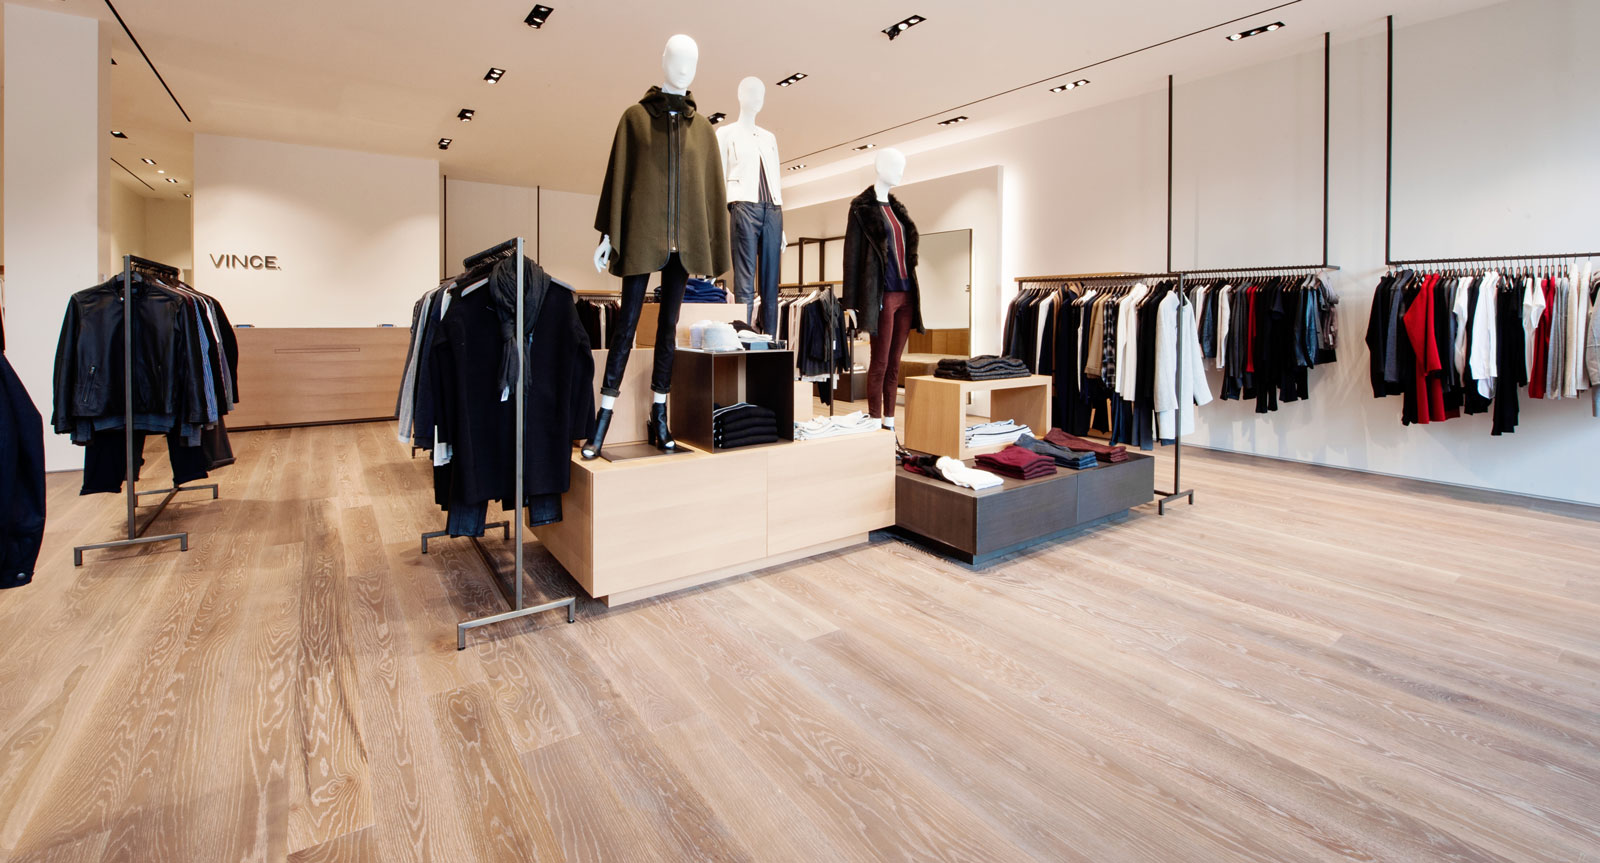 white oak flooring high end retail store design